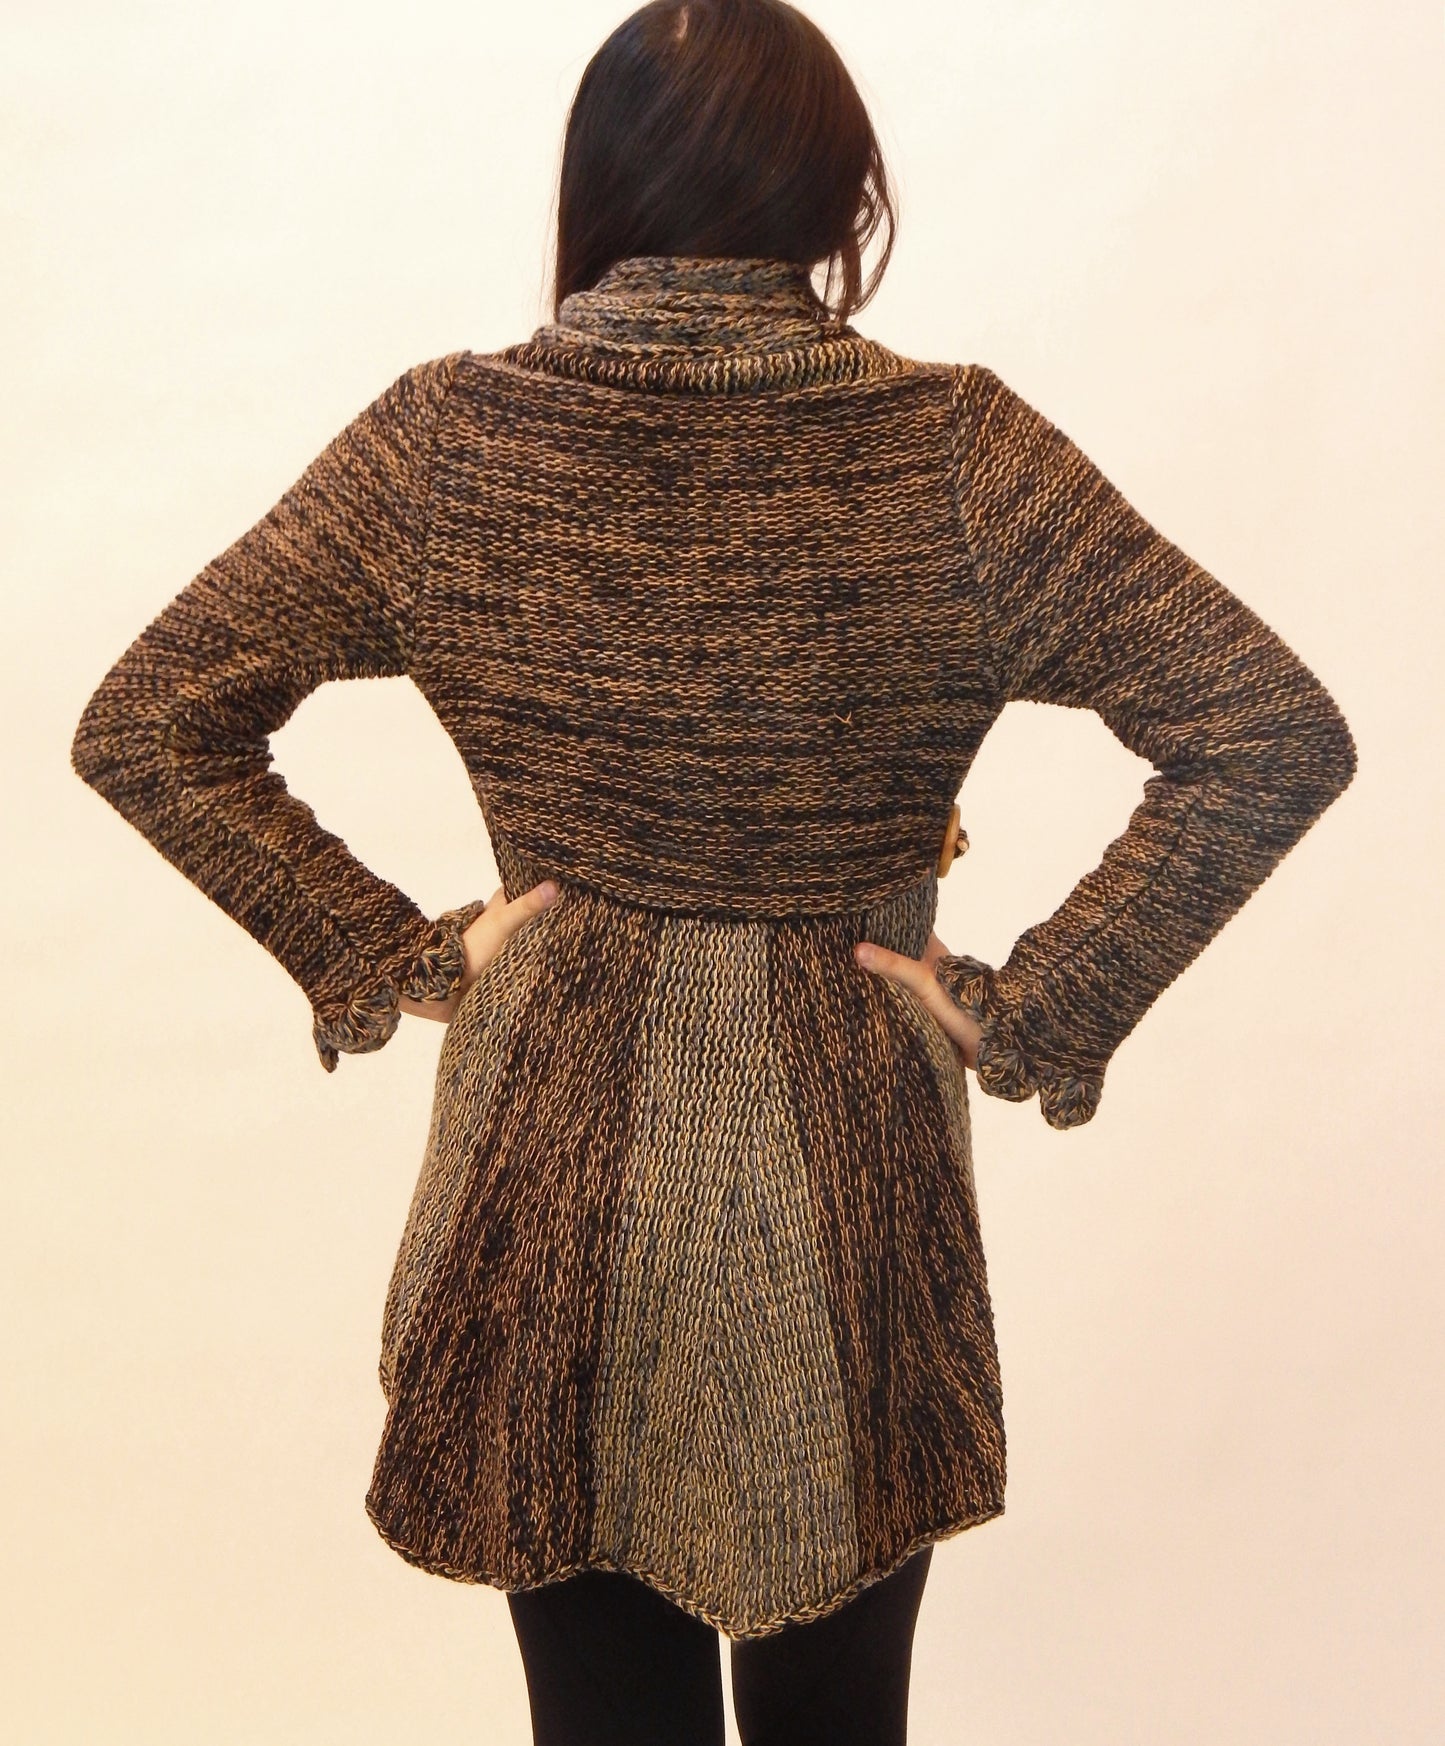 Fine Alpaca Wool Tailored Peacoat Cardigan Petticoat Jacket Knitted Coat Open Versatile Stylish Elegant Fitted Wrap Crochet Sleeve Browns